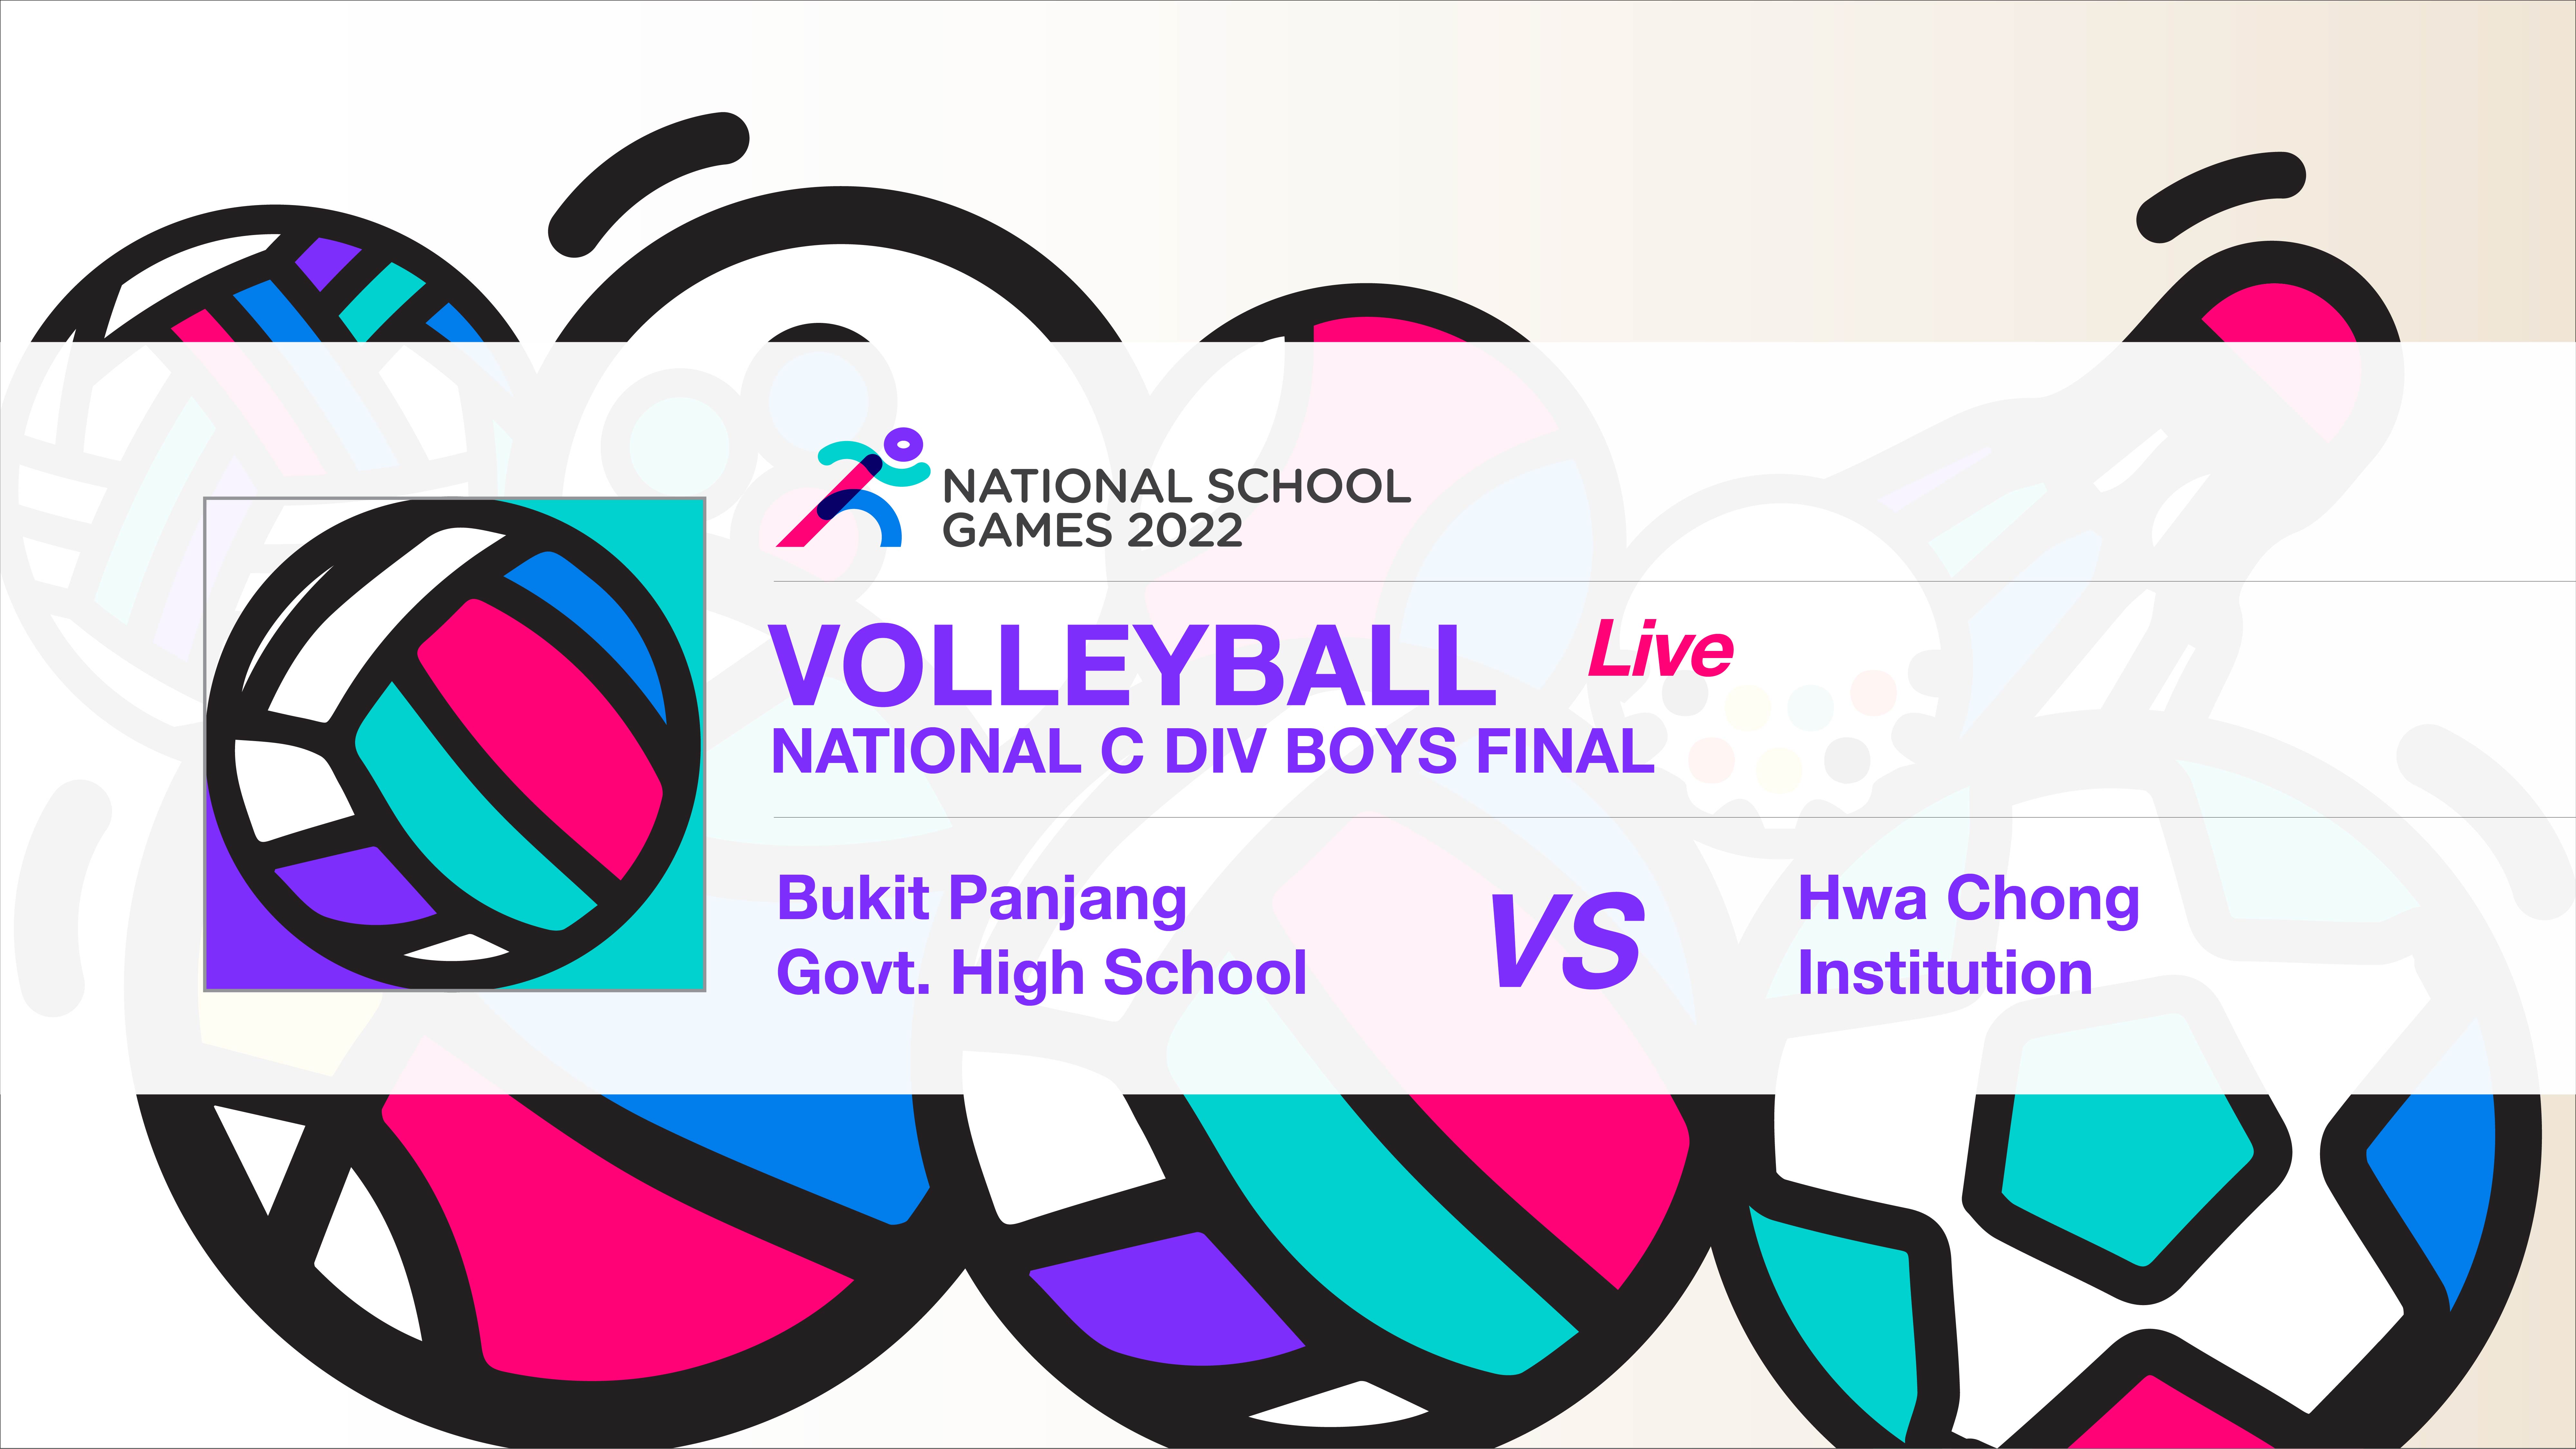 SSSC Volleyball National C Division Boys Final | Bukit Panjang Govt. High School vs Hwa Chong Institution